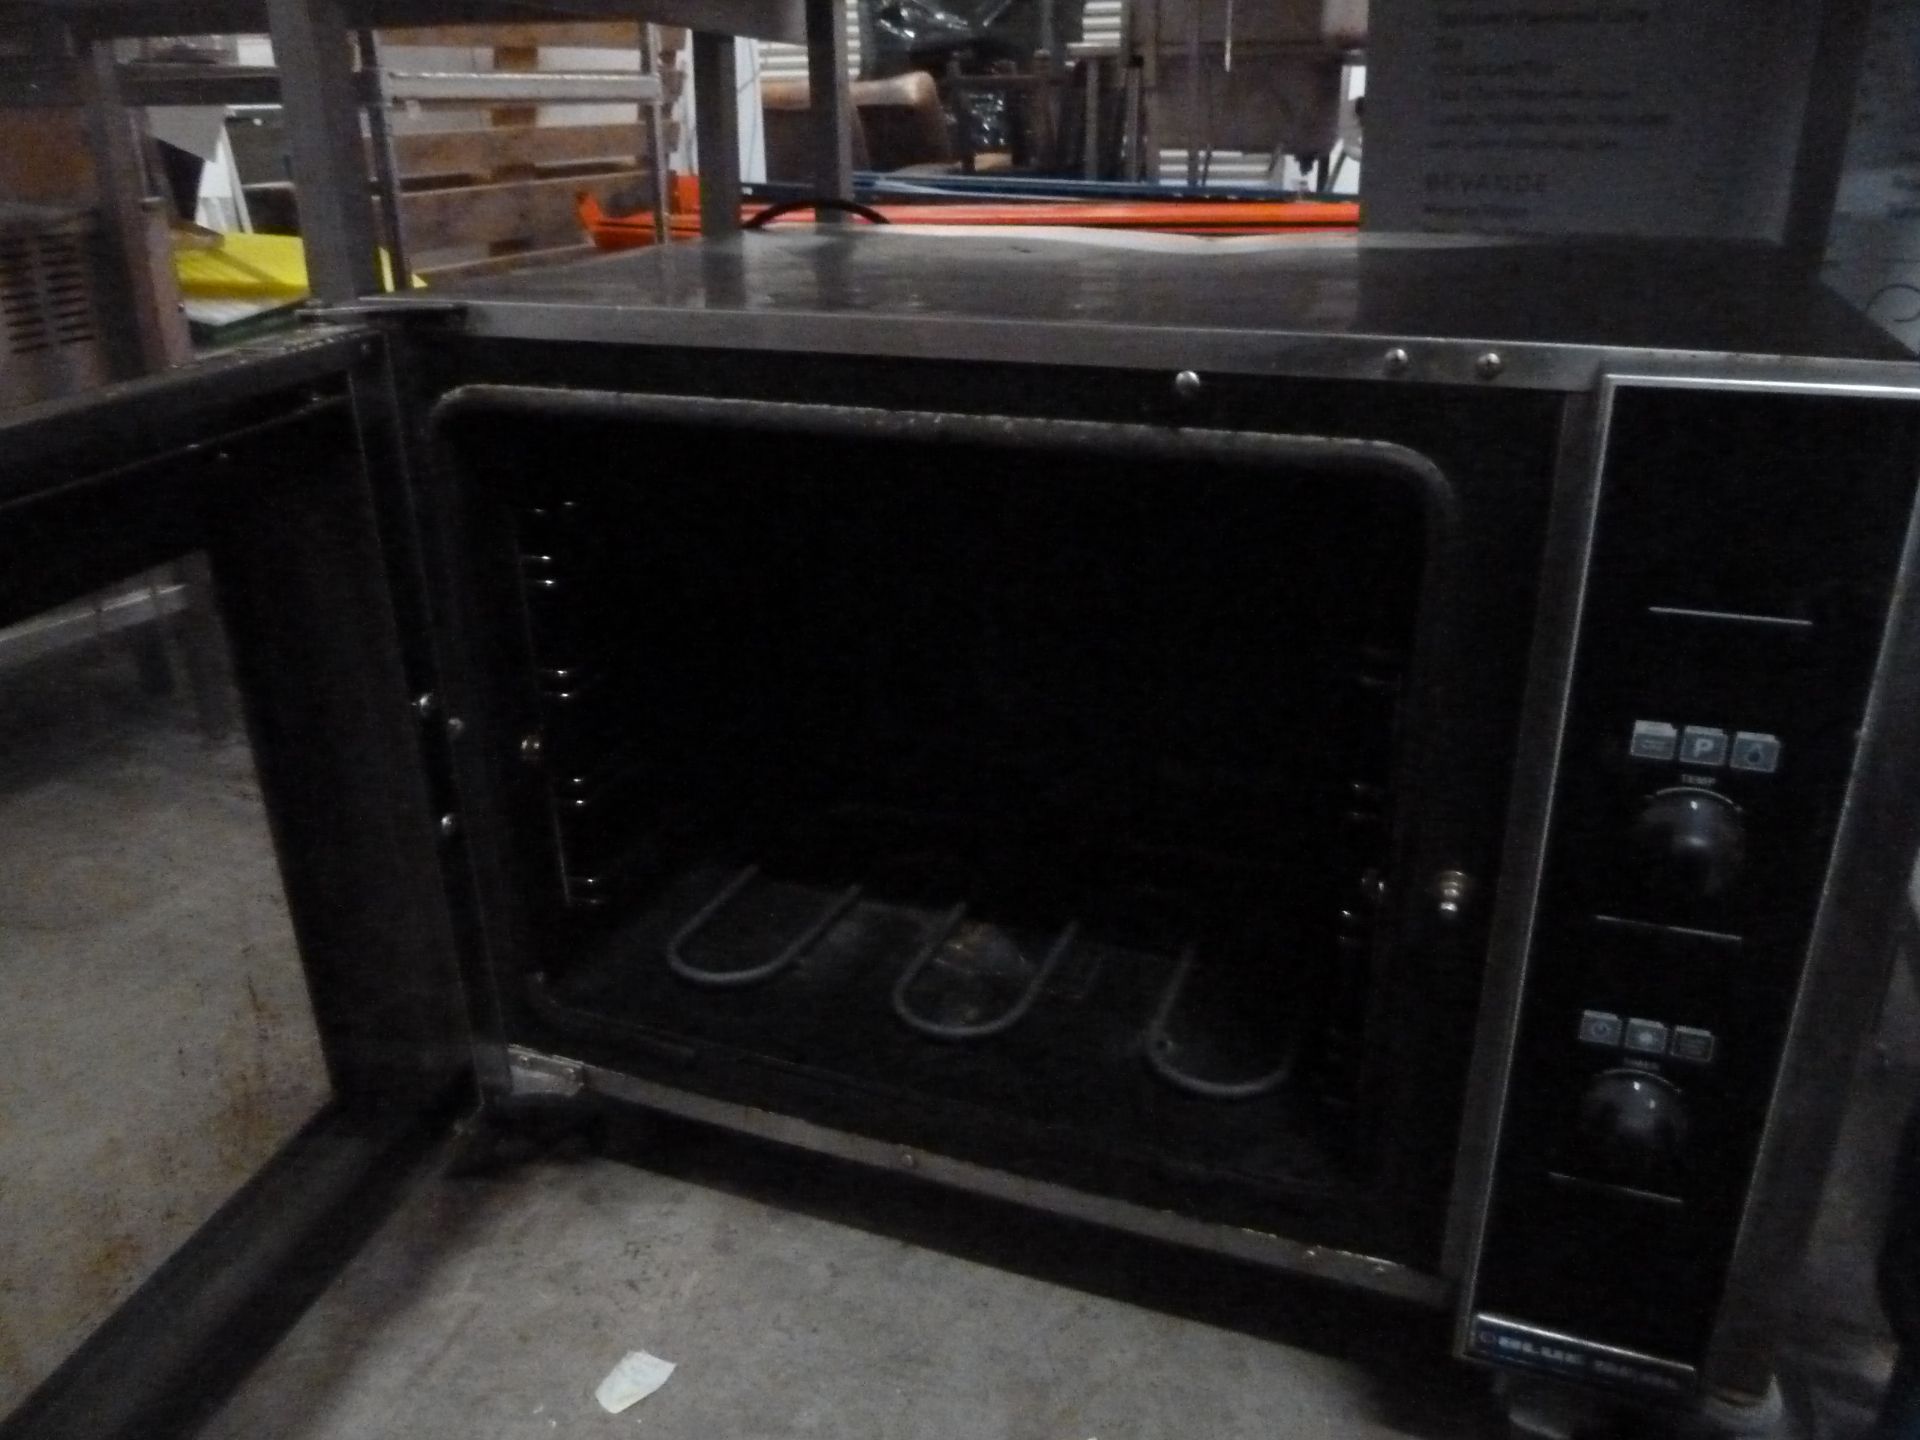 *Blueseal Turbofan oven E31D4 - 4 shelf, from a national chain, on castors. 800w x 660d x 700h - Image 2 of 5